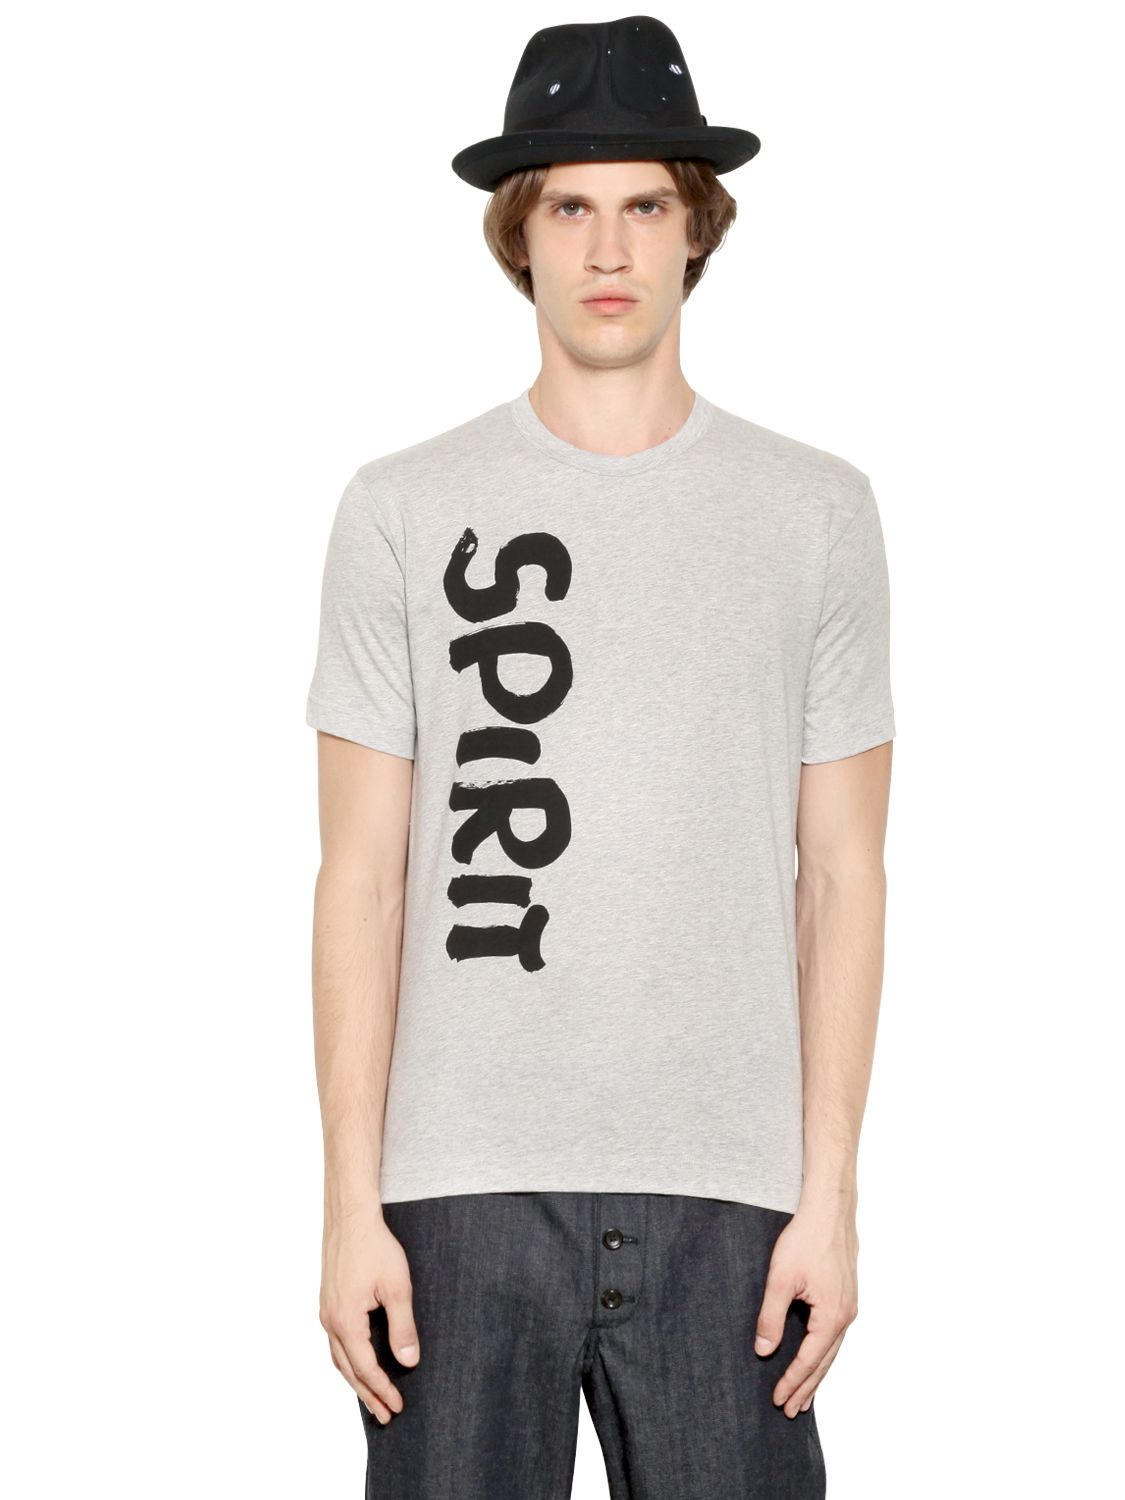 Lyst - Comme des Garçons Spirit Printed Cotton Jersey T-shirt in Gray ...